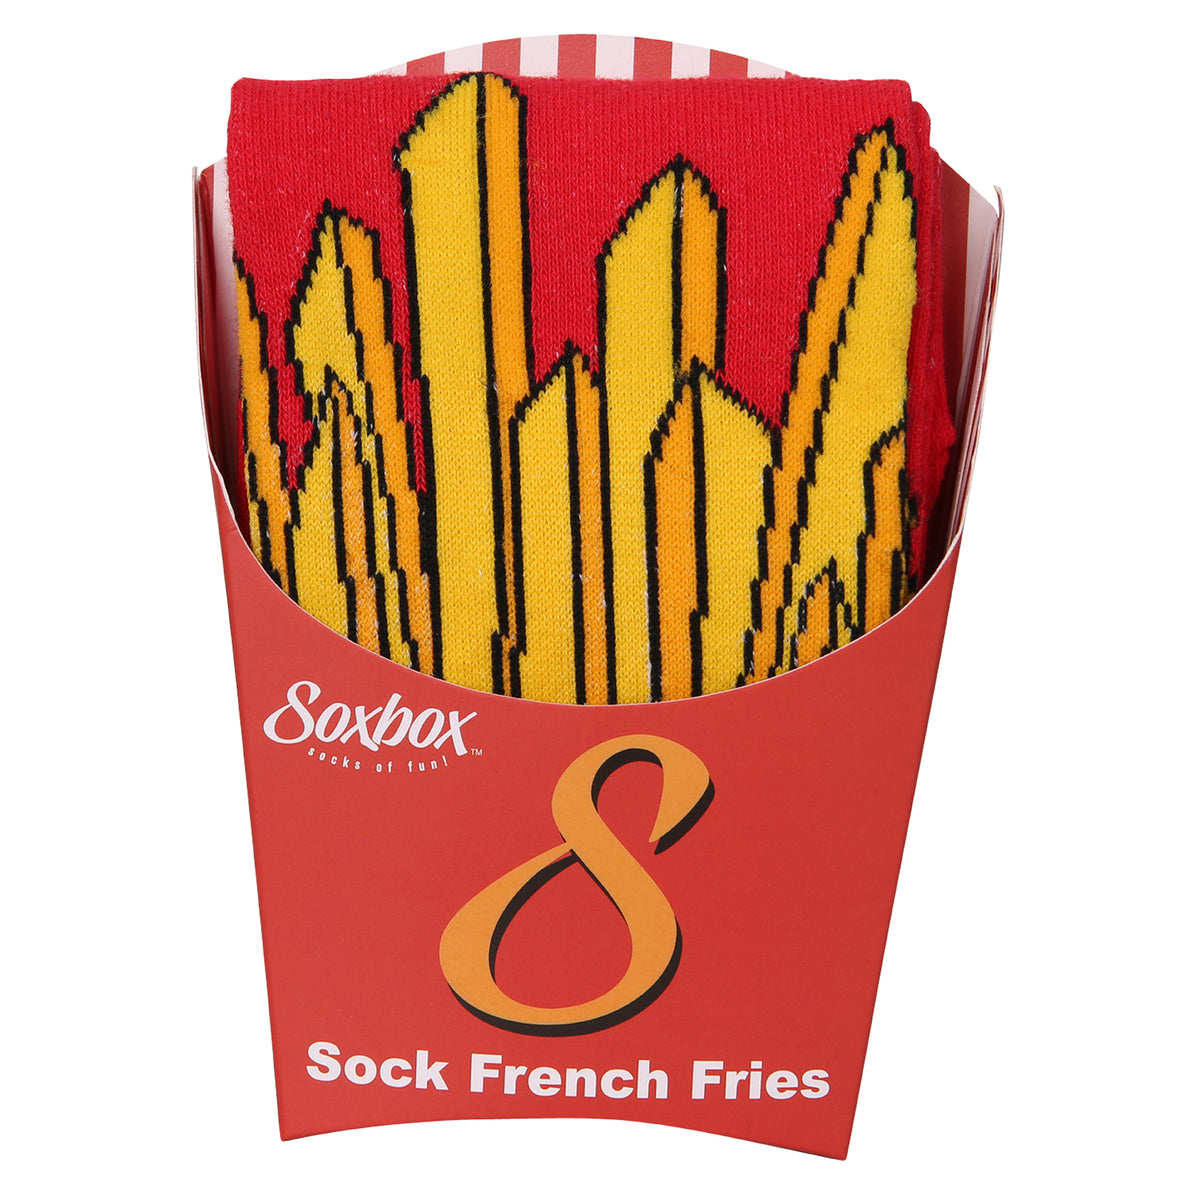 Soxbox French Fries Novelty Socks 1 Pack